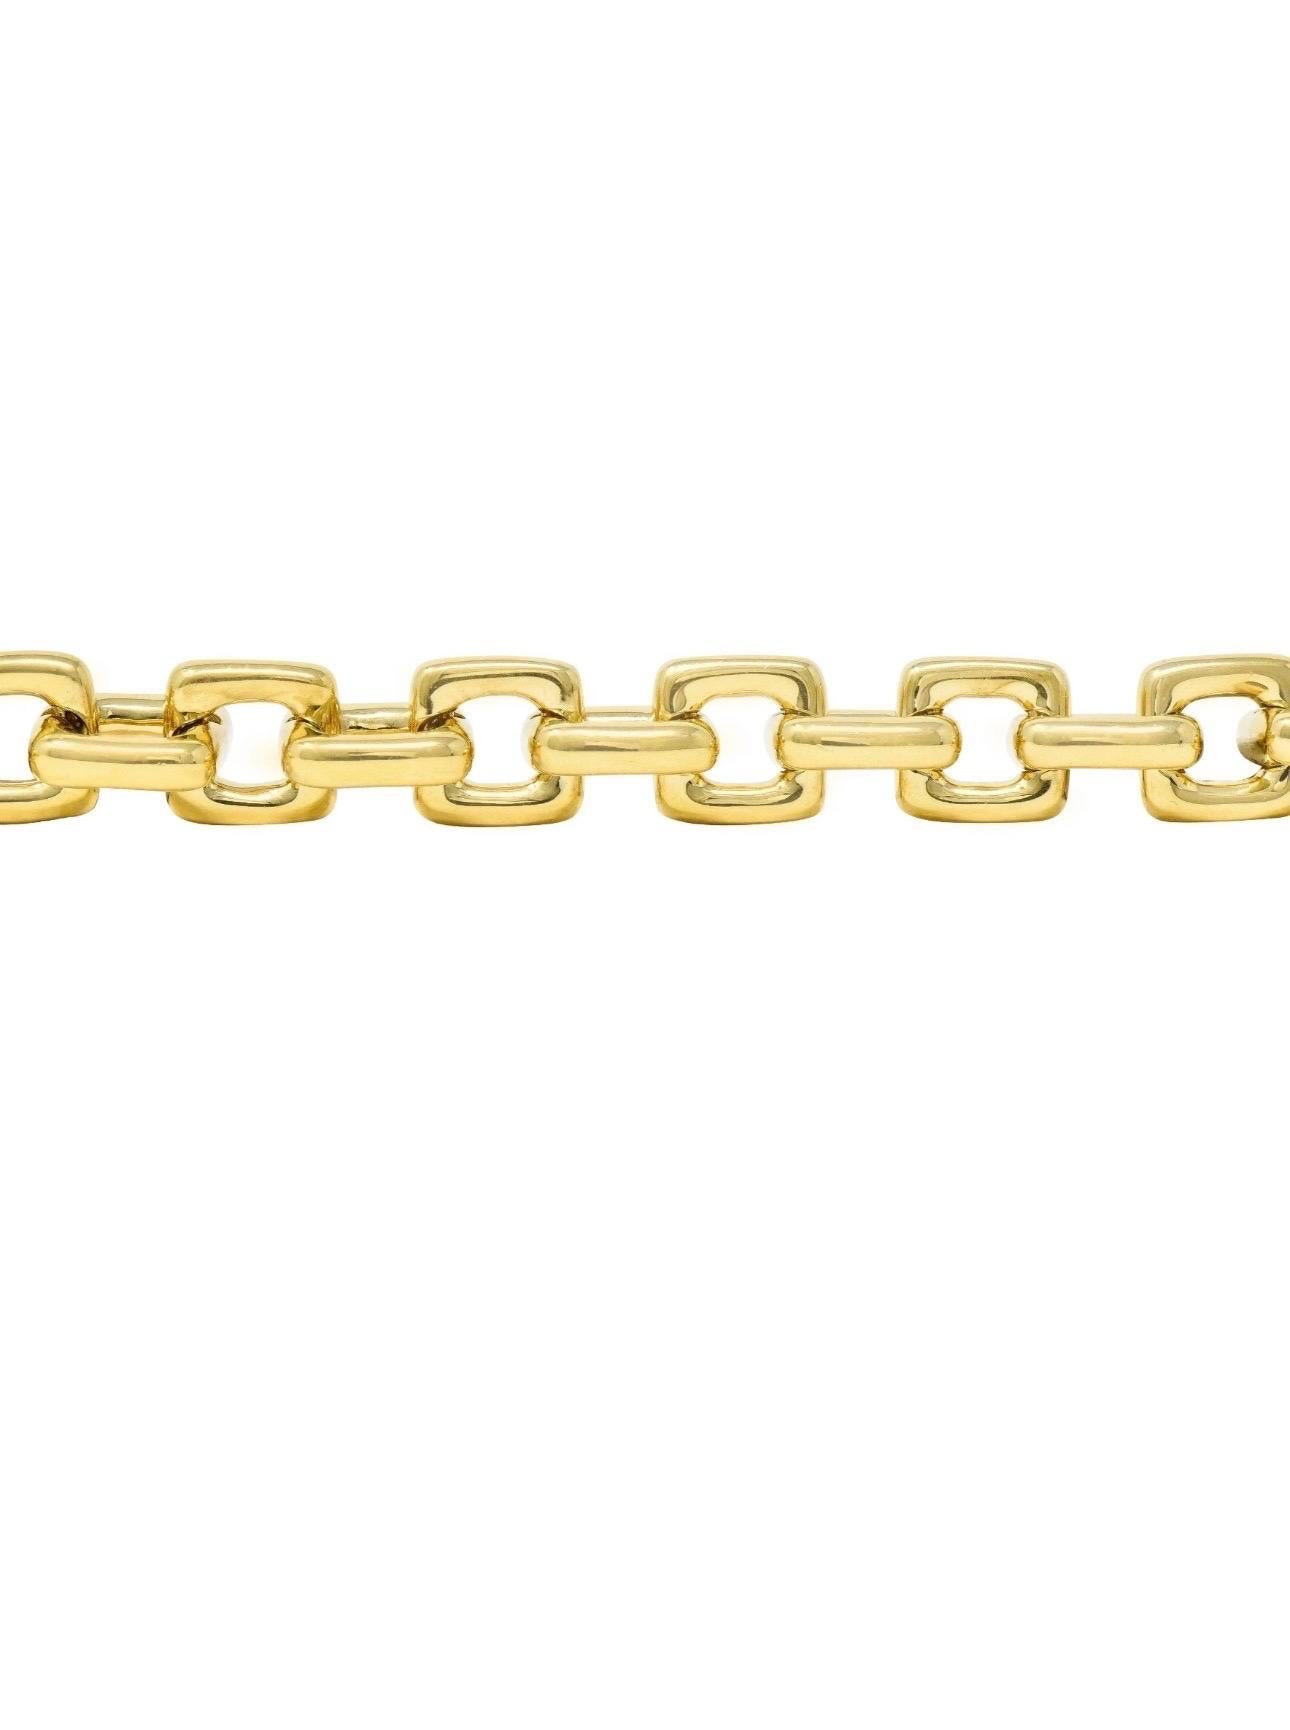 Louis Vuitton Padlock & Keys+ Two Bags Charm Bracelet en or jaune 125.7 Gm 18 KG en vente 1